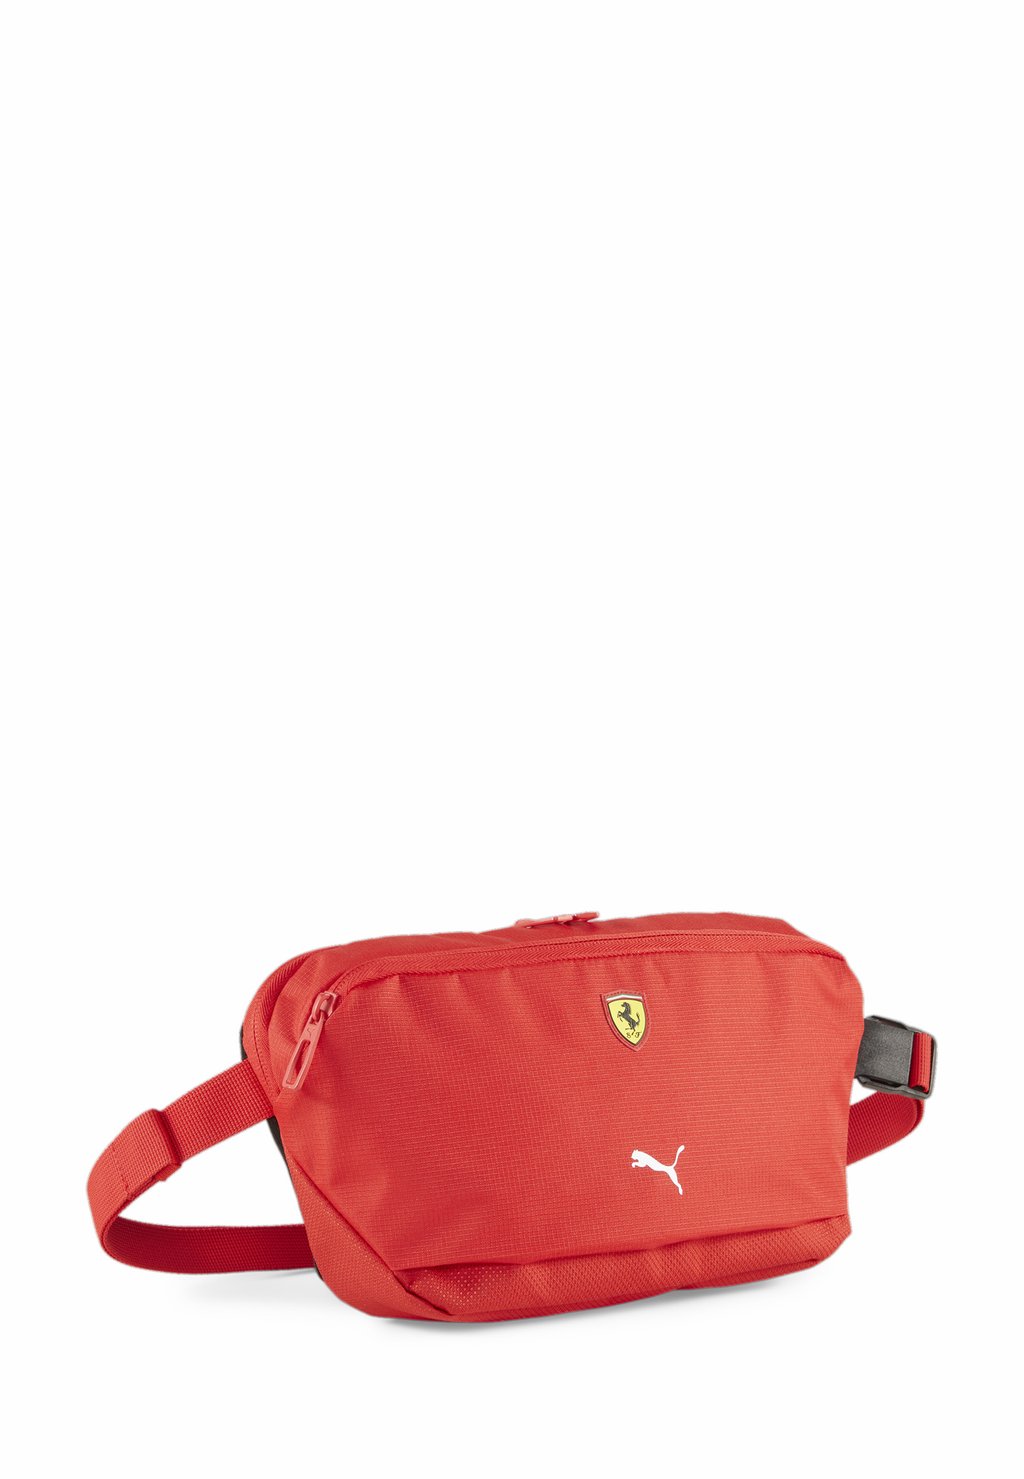 Поясная сумка Scuderia Ferrari Race Motorsport Puma, цвет rosso corsa